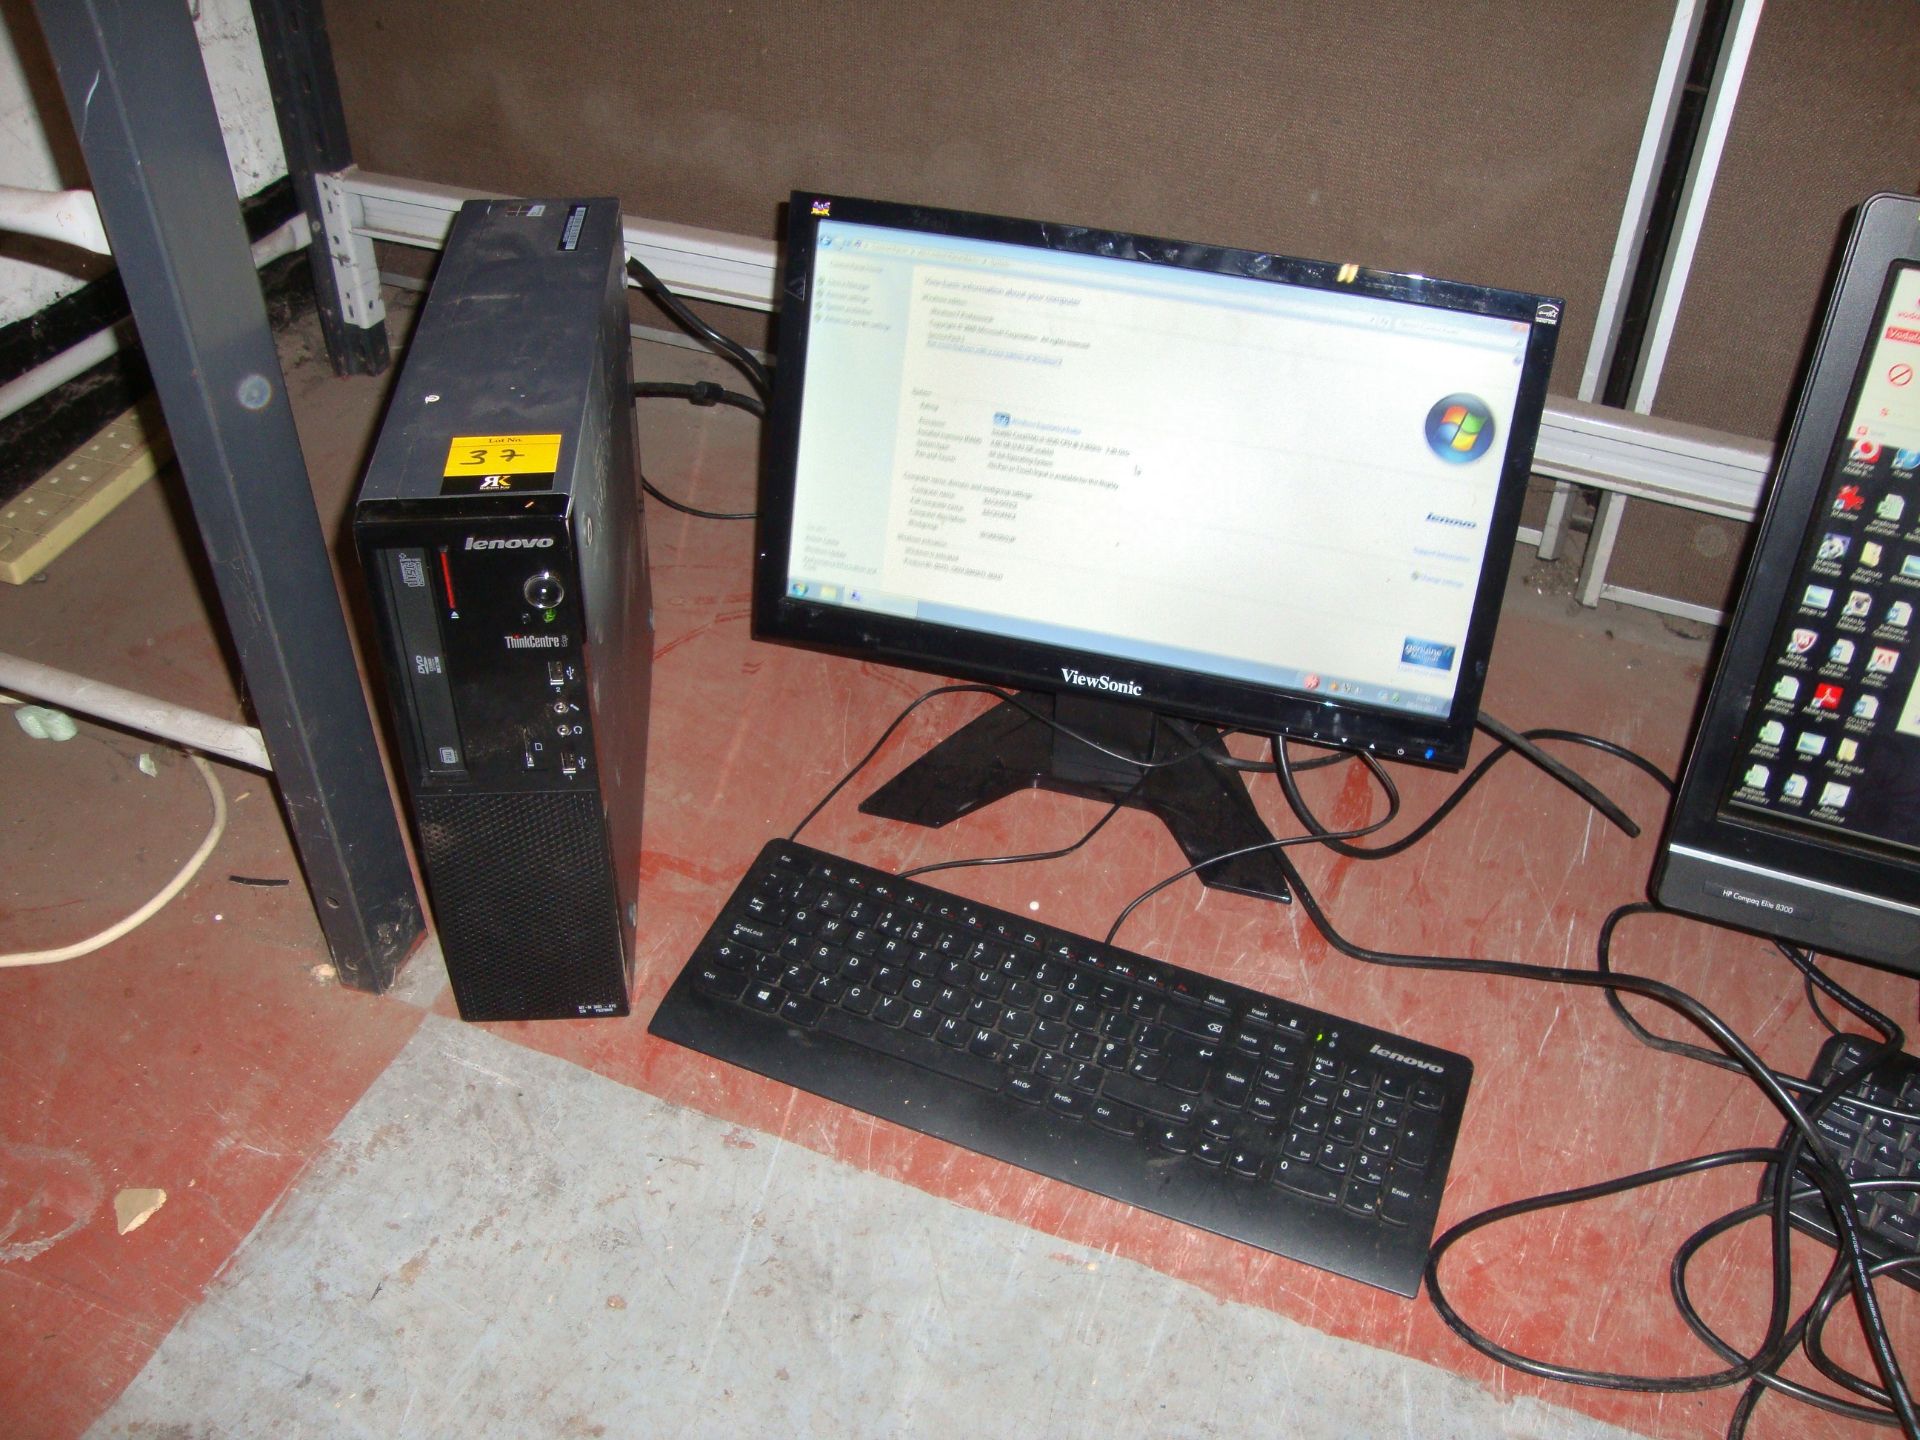 Lenovo desktop PC with Intel Core i3-3220@ 3.3GHz, 4Gb RAM, 500Gb hard drive, keyboard and Viewsonic